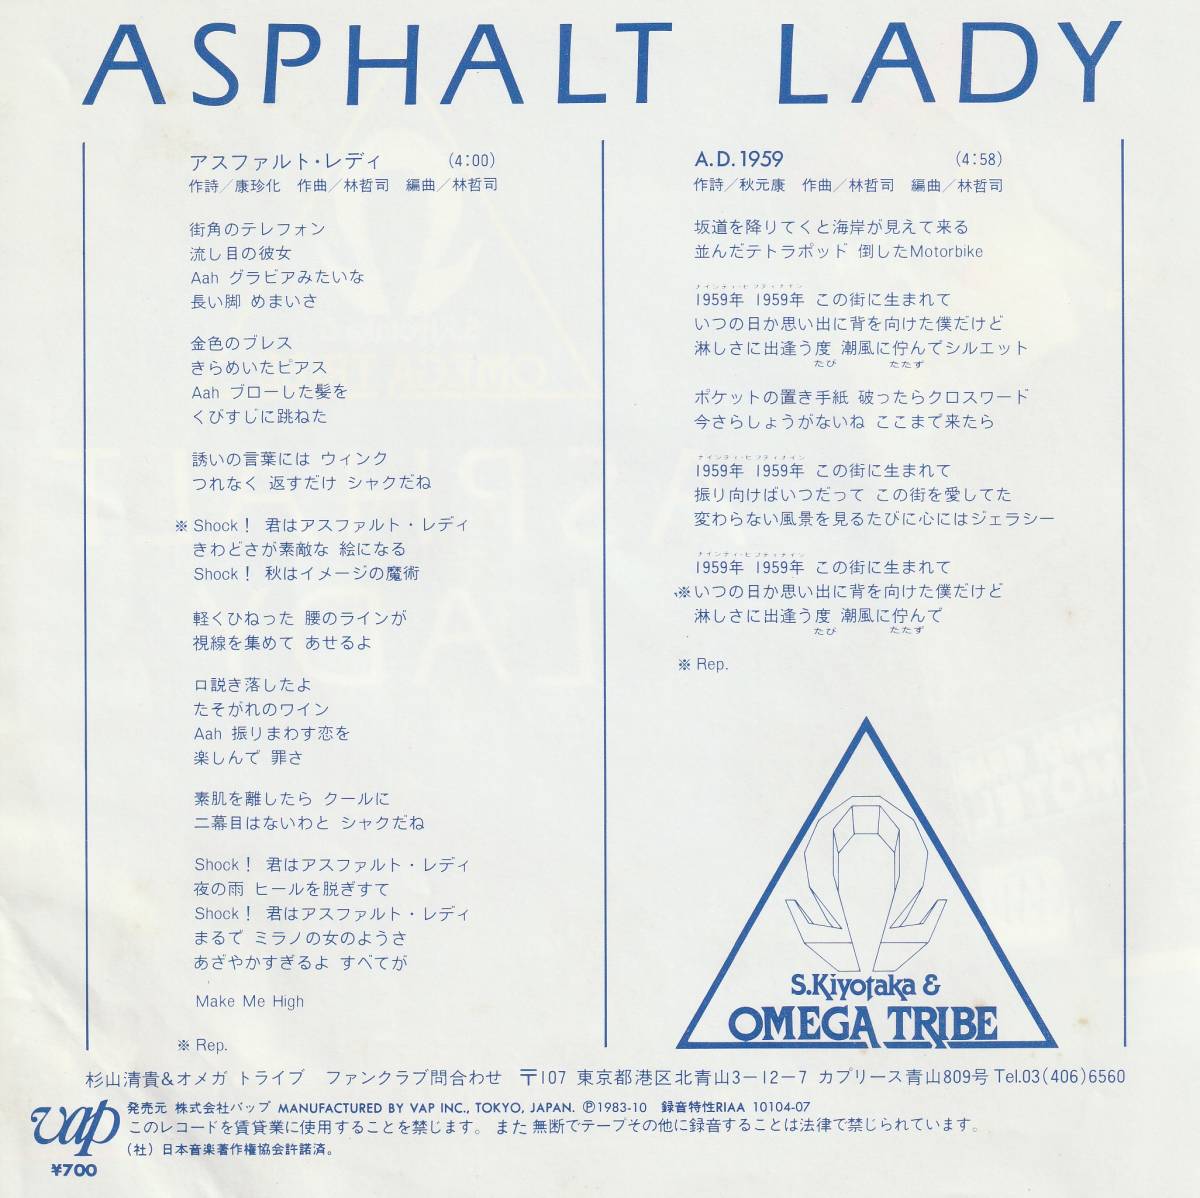  Sugiyama Kiyotaka & Omega Tribe : ASPHALT LADY / A.D.1959 domestic record used analogue EP single record record 1983 year 10104-07 M2-KDO-1081